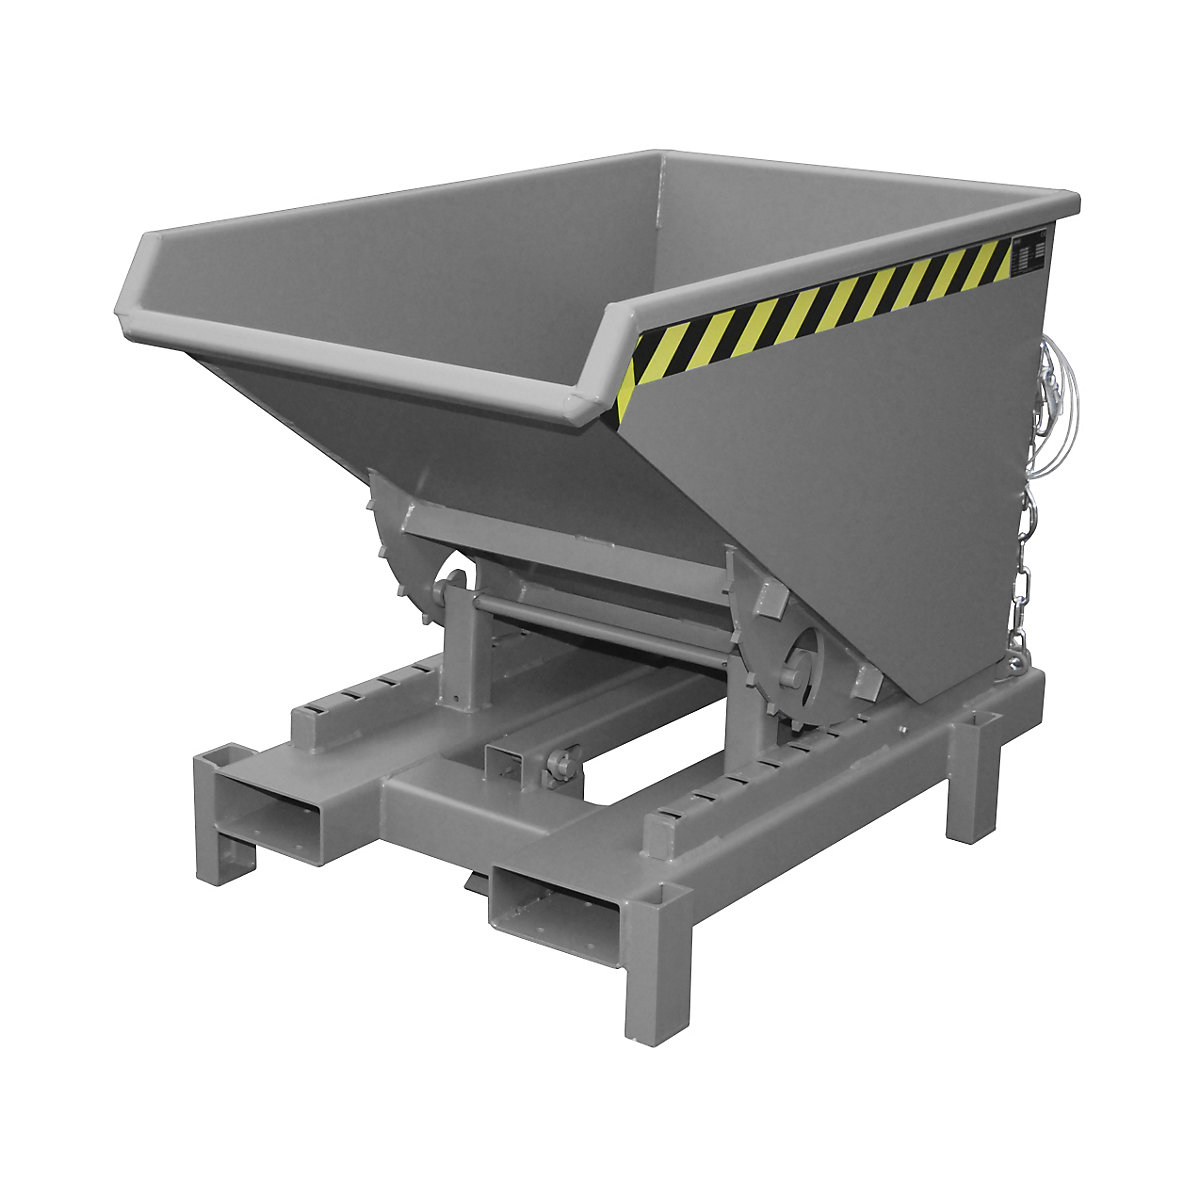 Volquete para cargas pesadas – eurokraft pro, capacidad 0,3 m³, carga máx. 4000 kg, gris RAL 7005-12